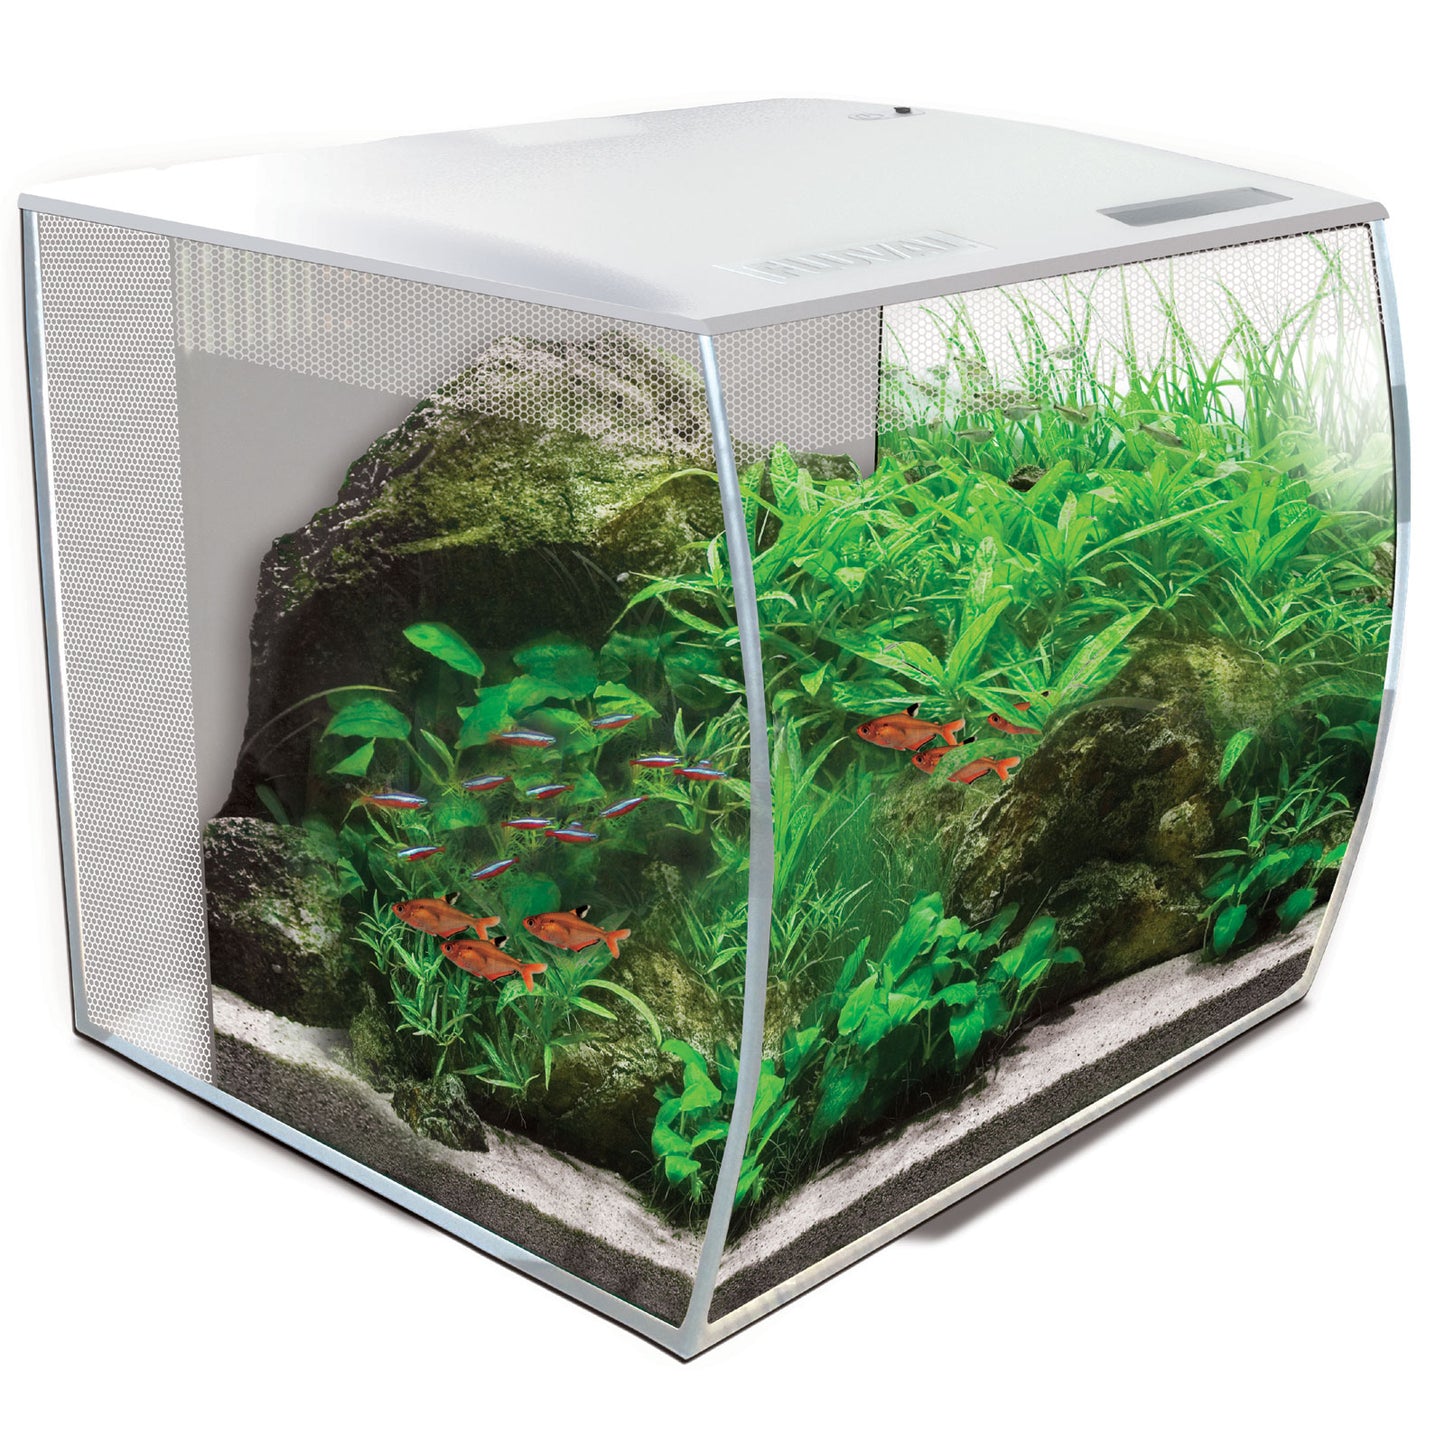 Fluval Flex LED Nano 34L - White Aquarium Tank with Integral Filter and Remote Control